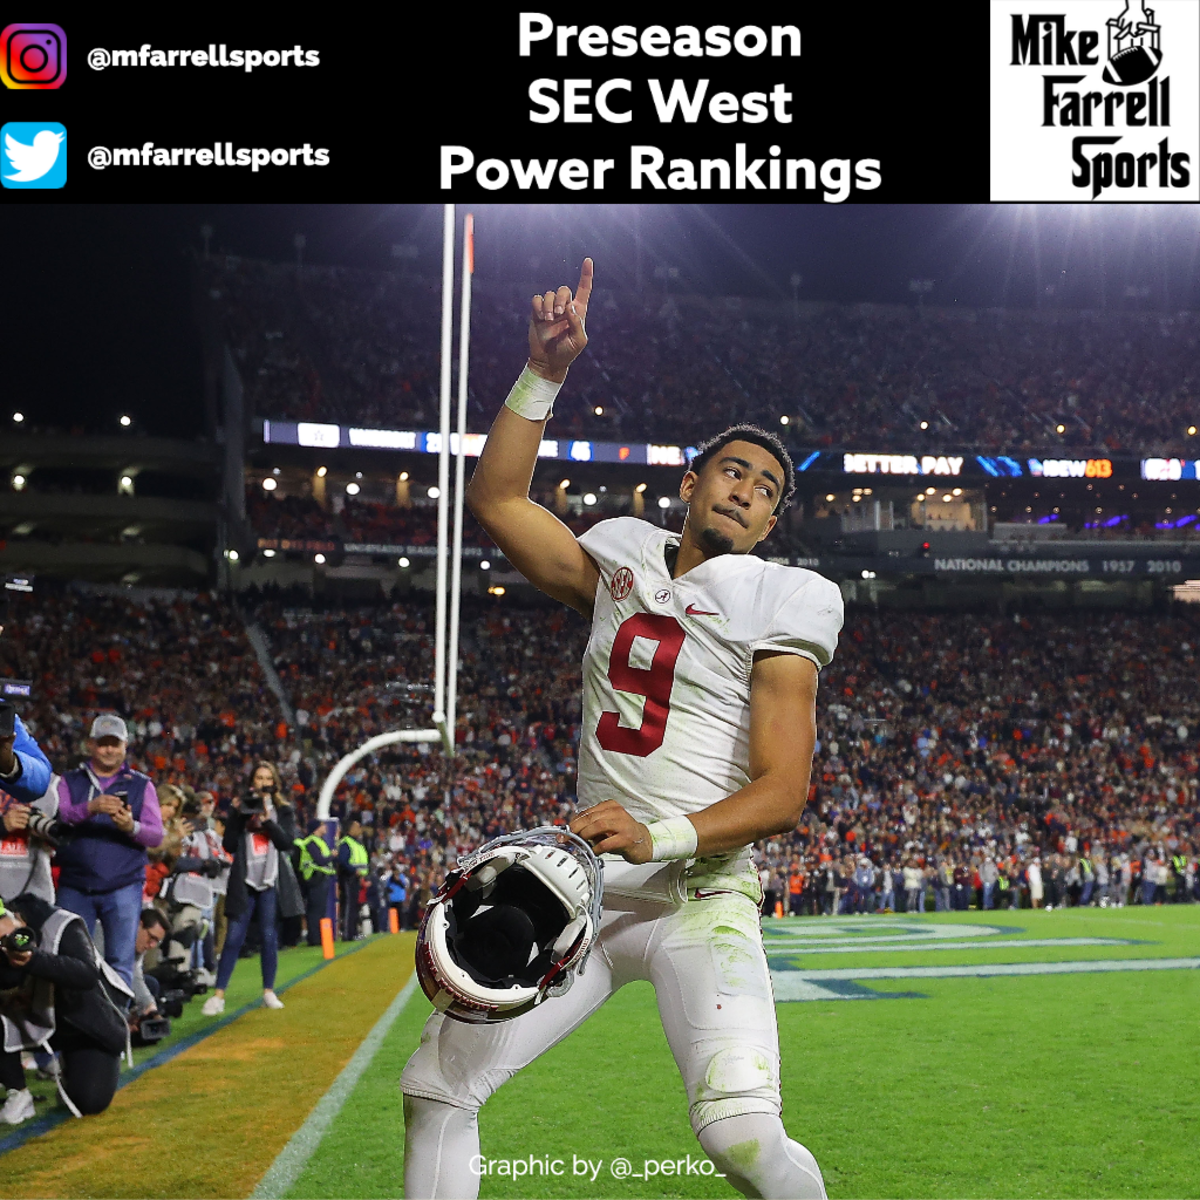 Preseason SEC West Power Rankings